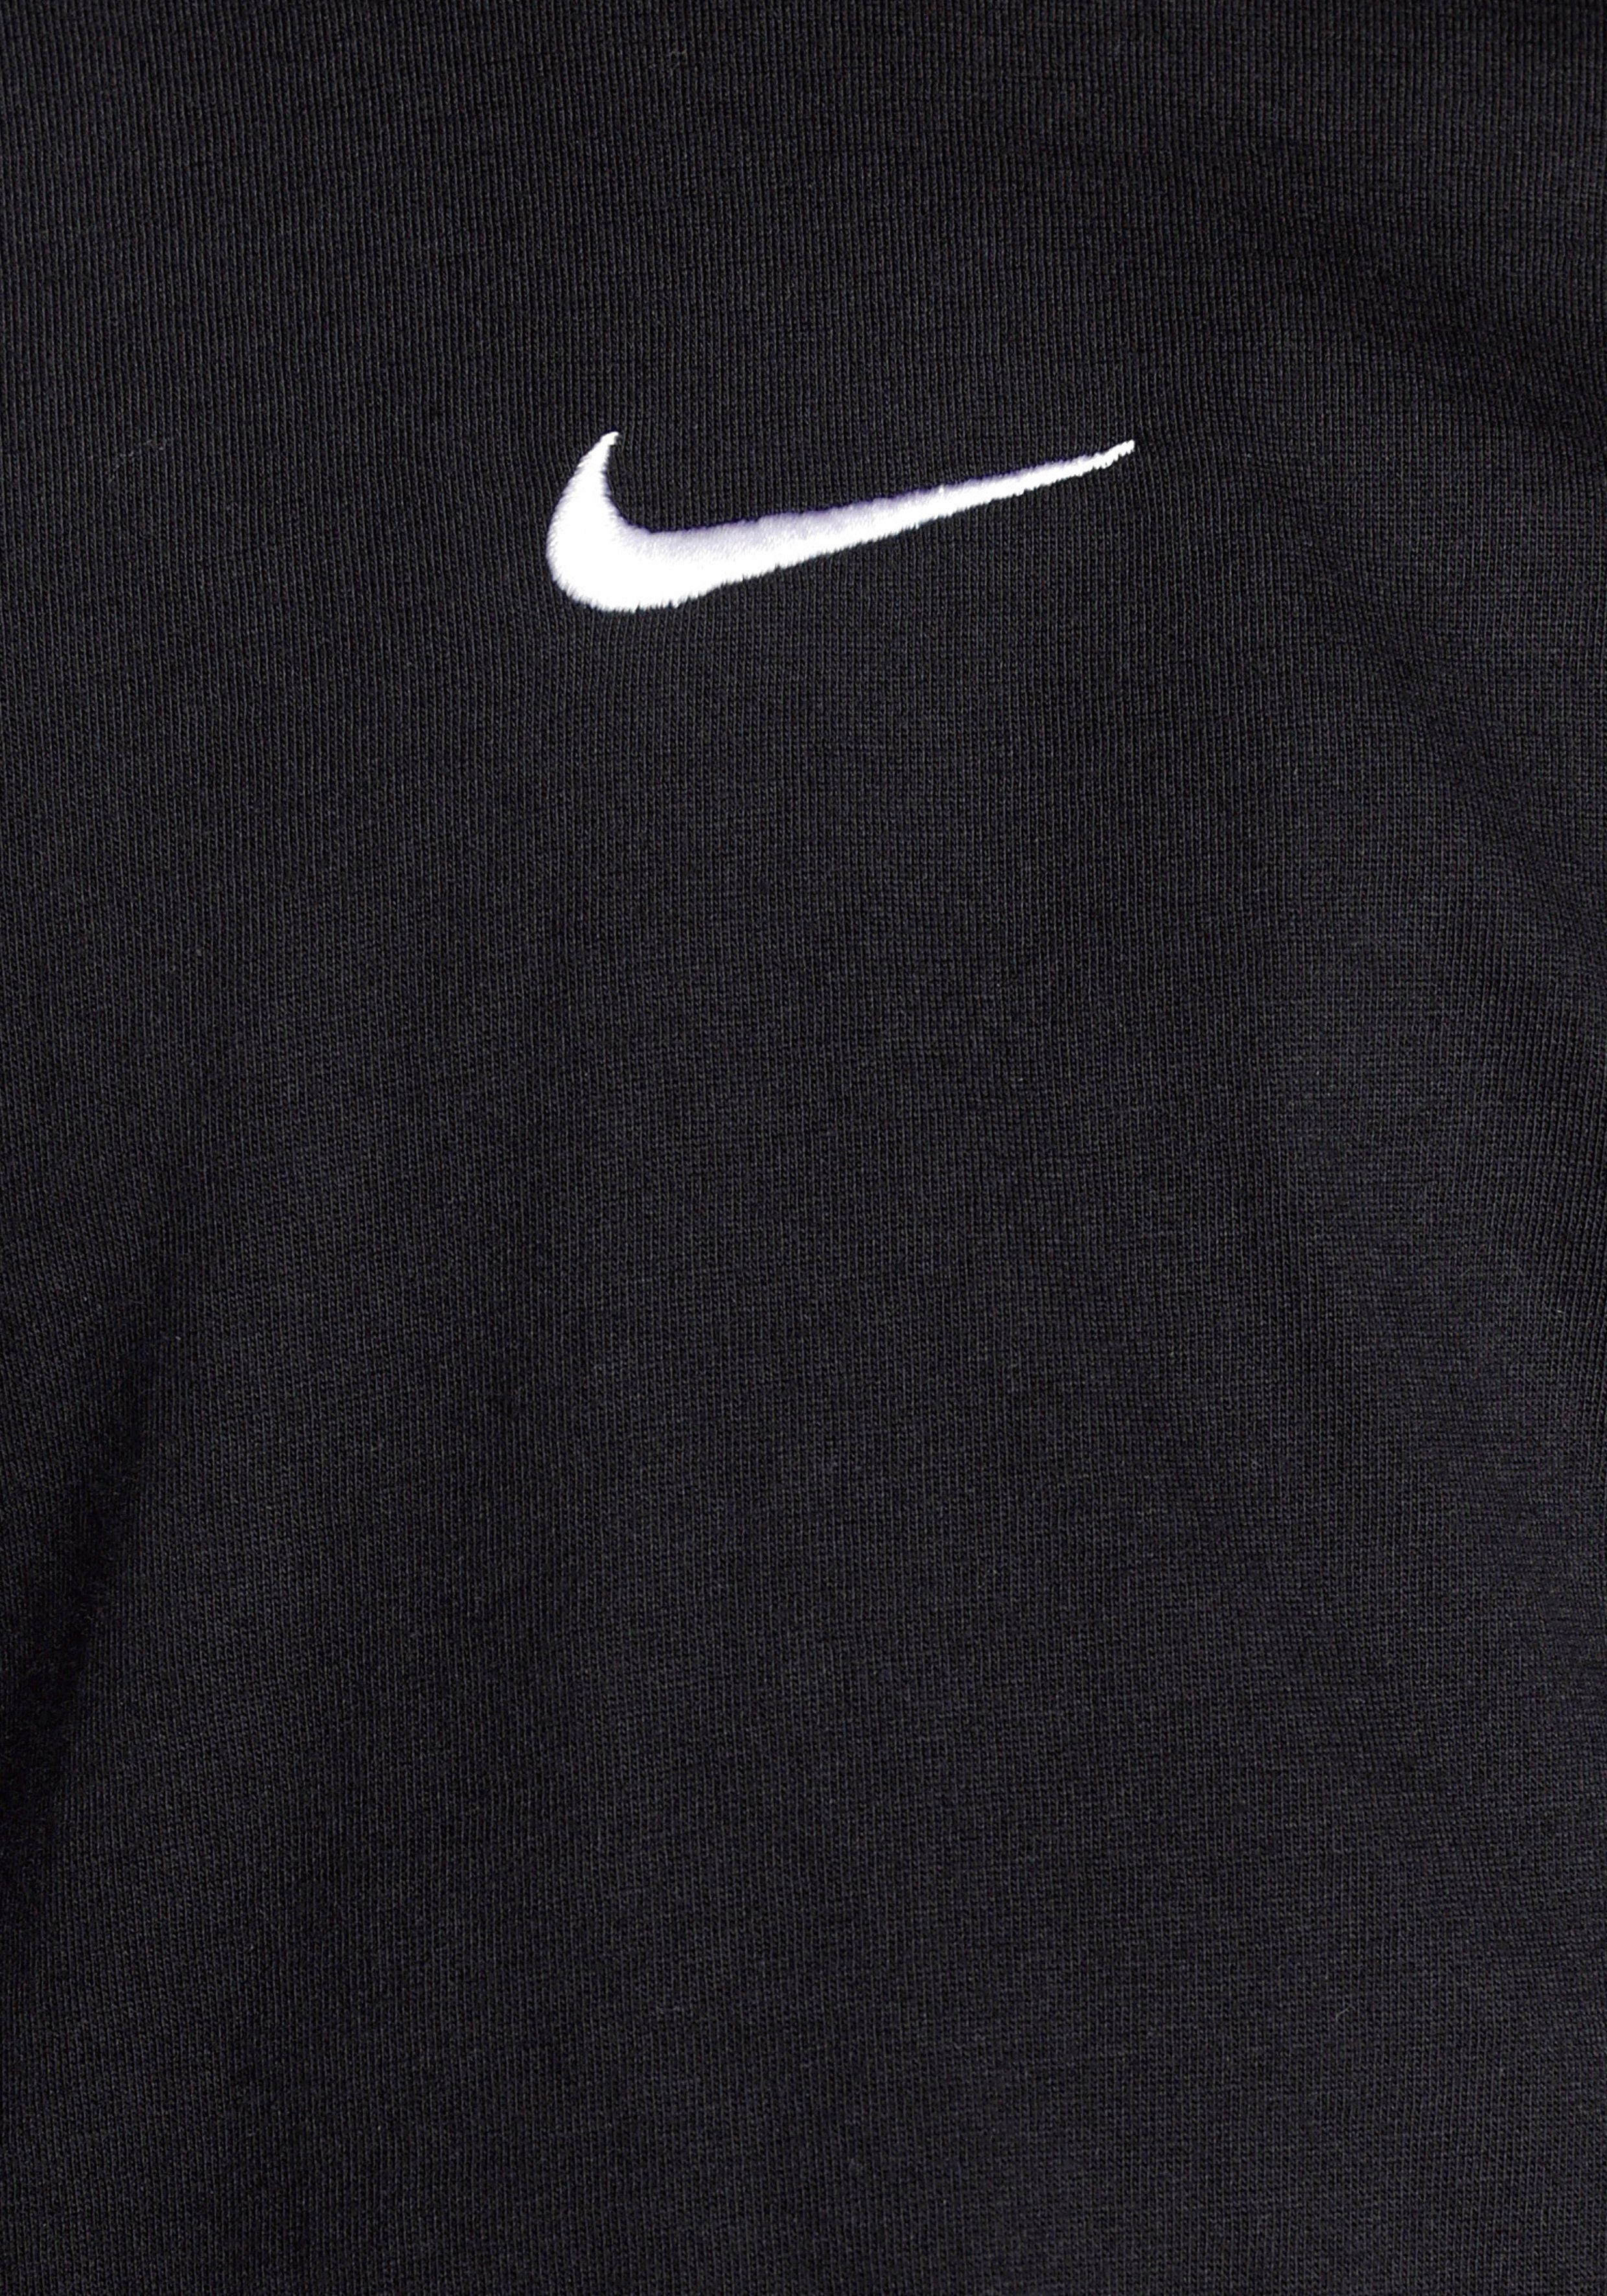 T-Shirt BLACK/WHITE Sportswear BIG T-SHIRT Nike KIDS' (GIRLS)